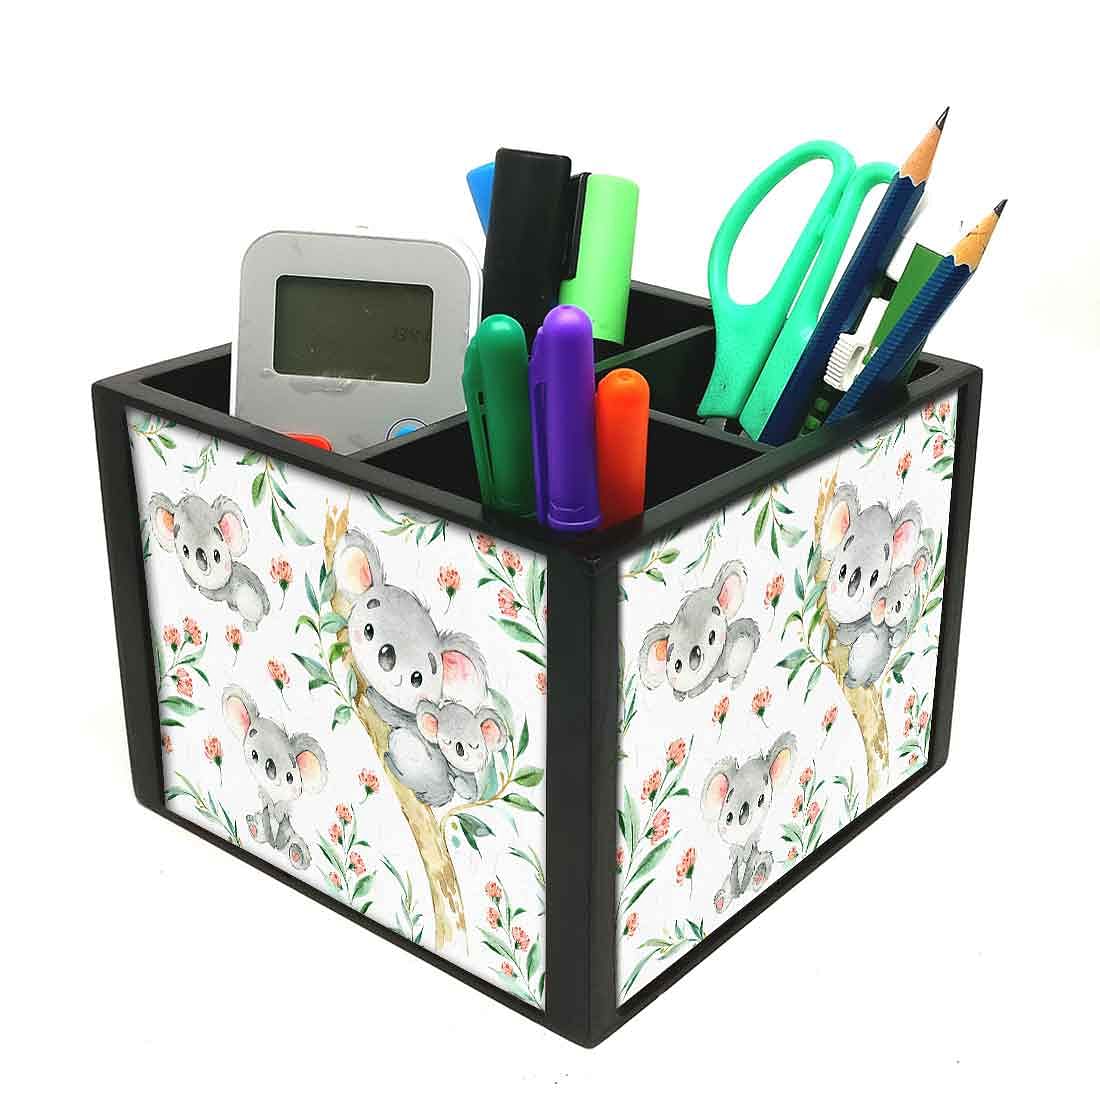 Nutcase 4 Slot Office Wooden Desktop Storage Holder Stand for Pen/Pencil/TV Remote Control/Stationery/Mobile Phone - Cute Koala Nutcase